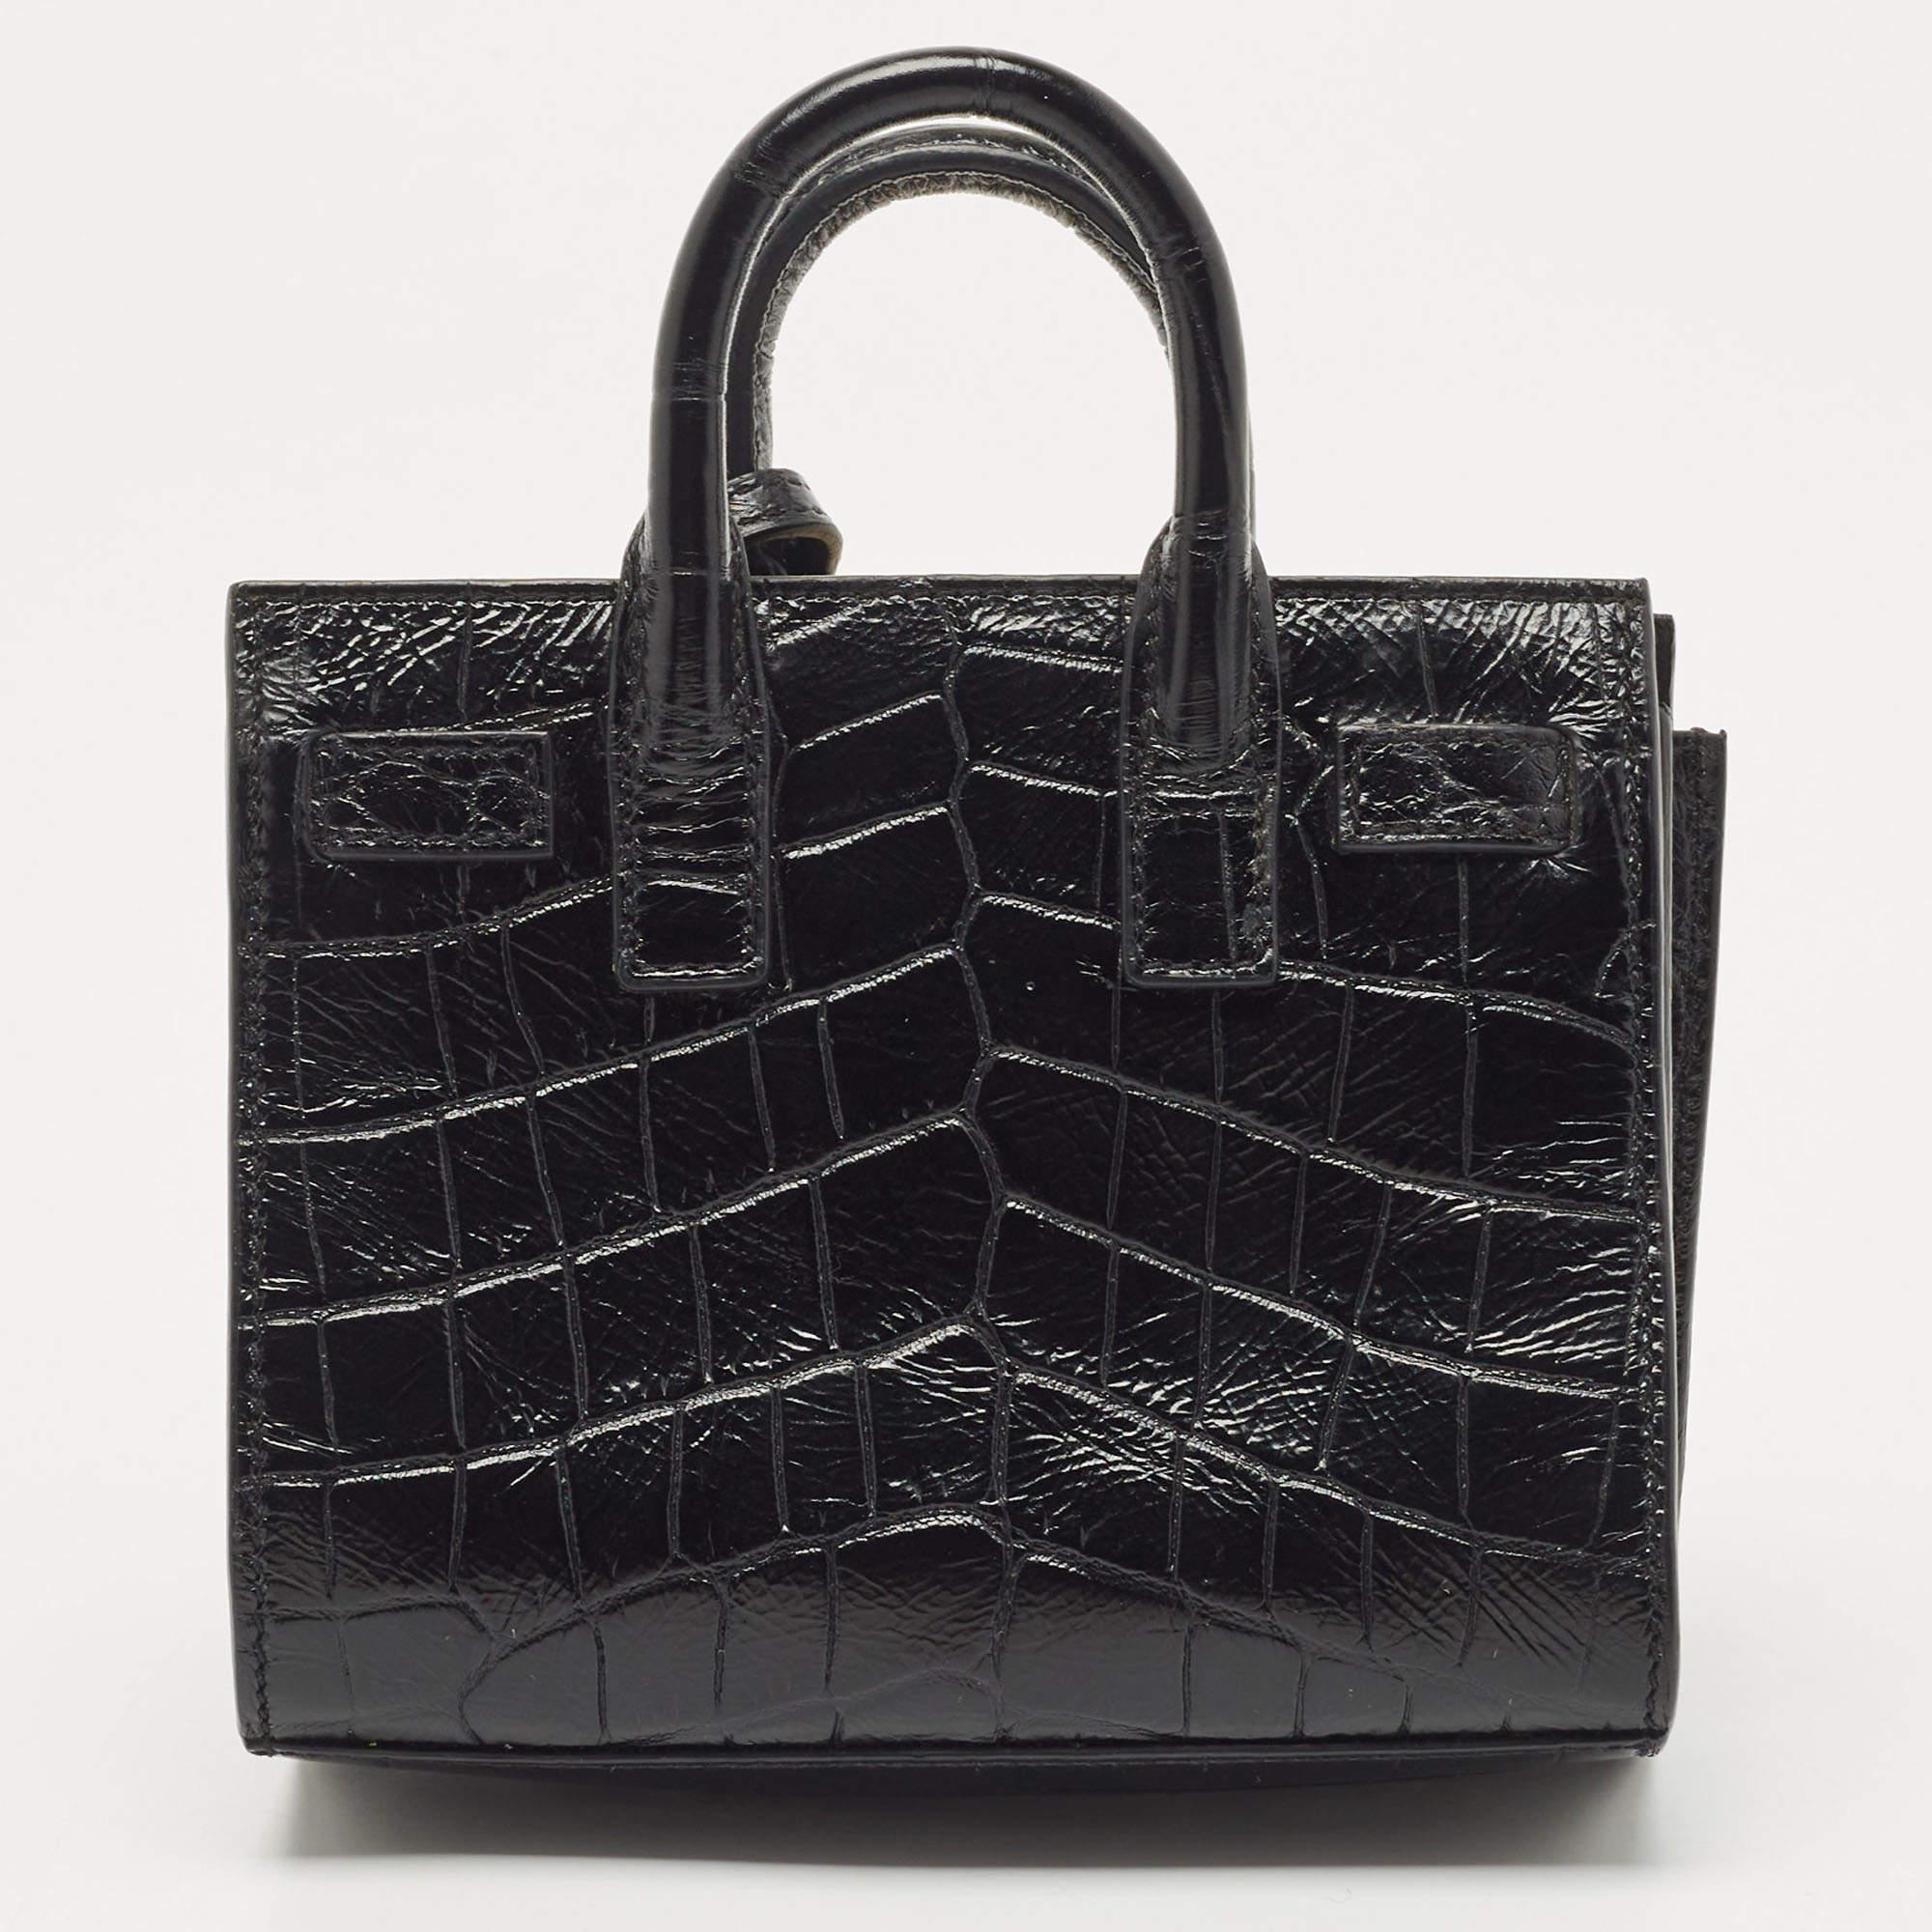 Saint Laurent Black Croc Embossed Leather Toy Classic Sac De Jour Tote 4